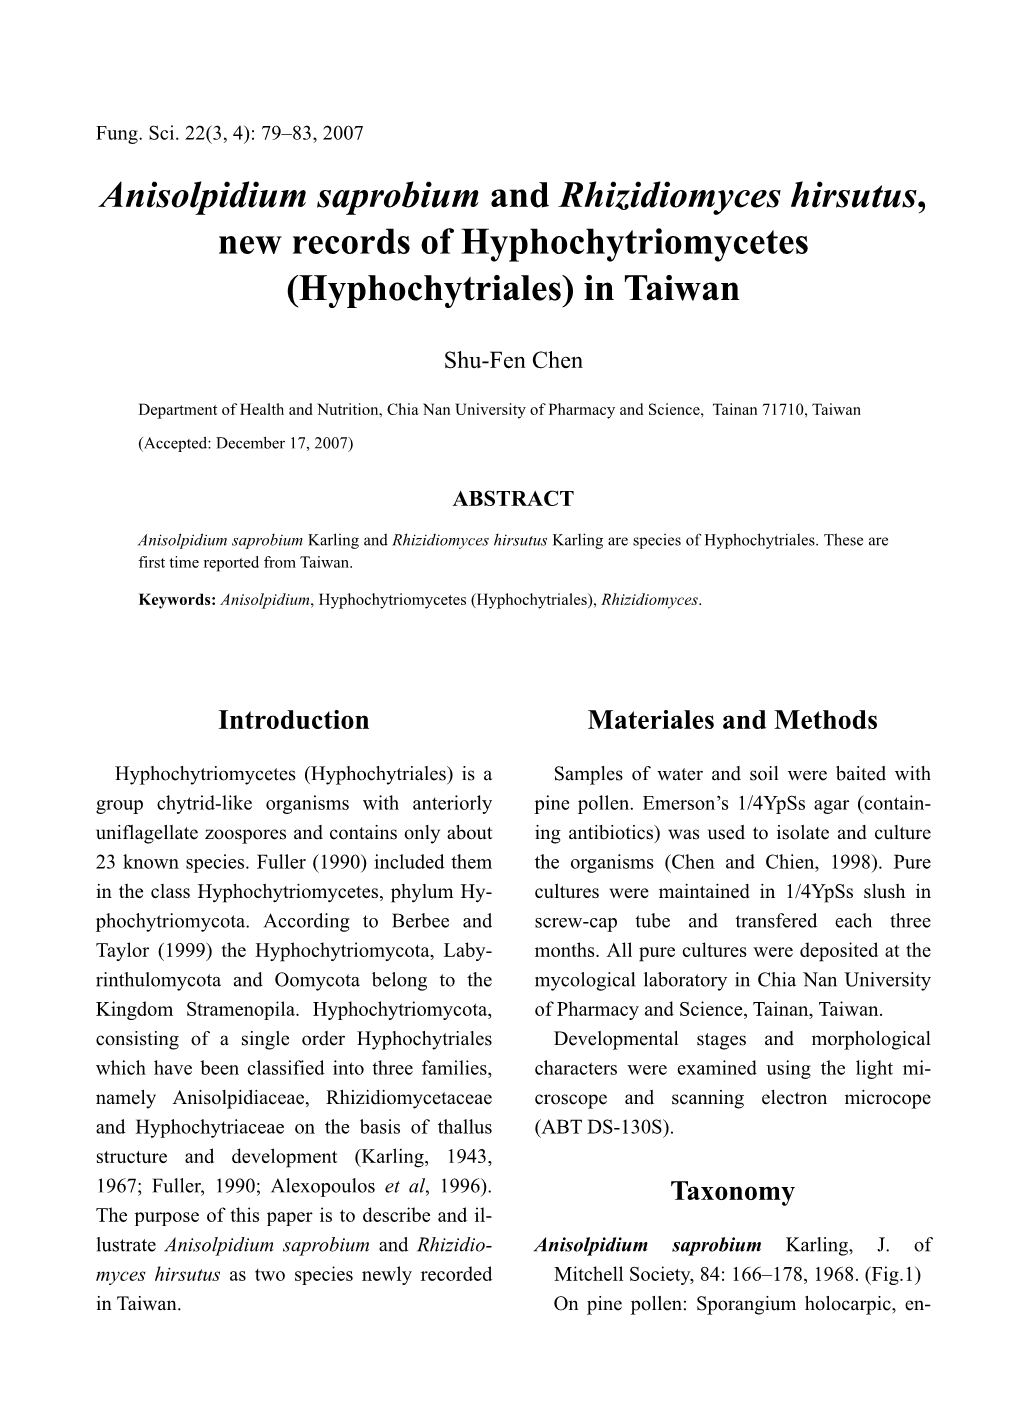 Anisolpidium Saprobium and Rhizidiomyces Hirsutus, New Records of Hyphochytriomycetes (Hyphochytriales) in Taiwan